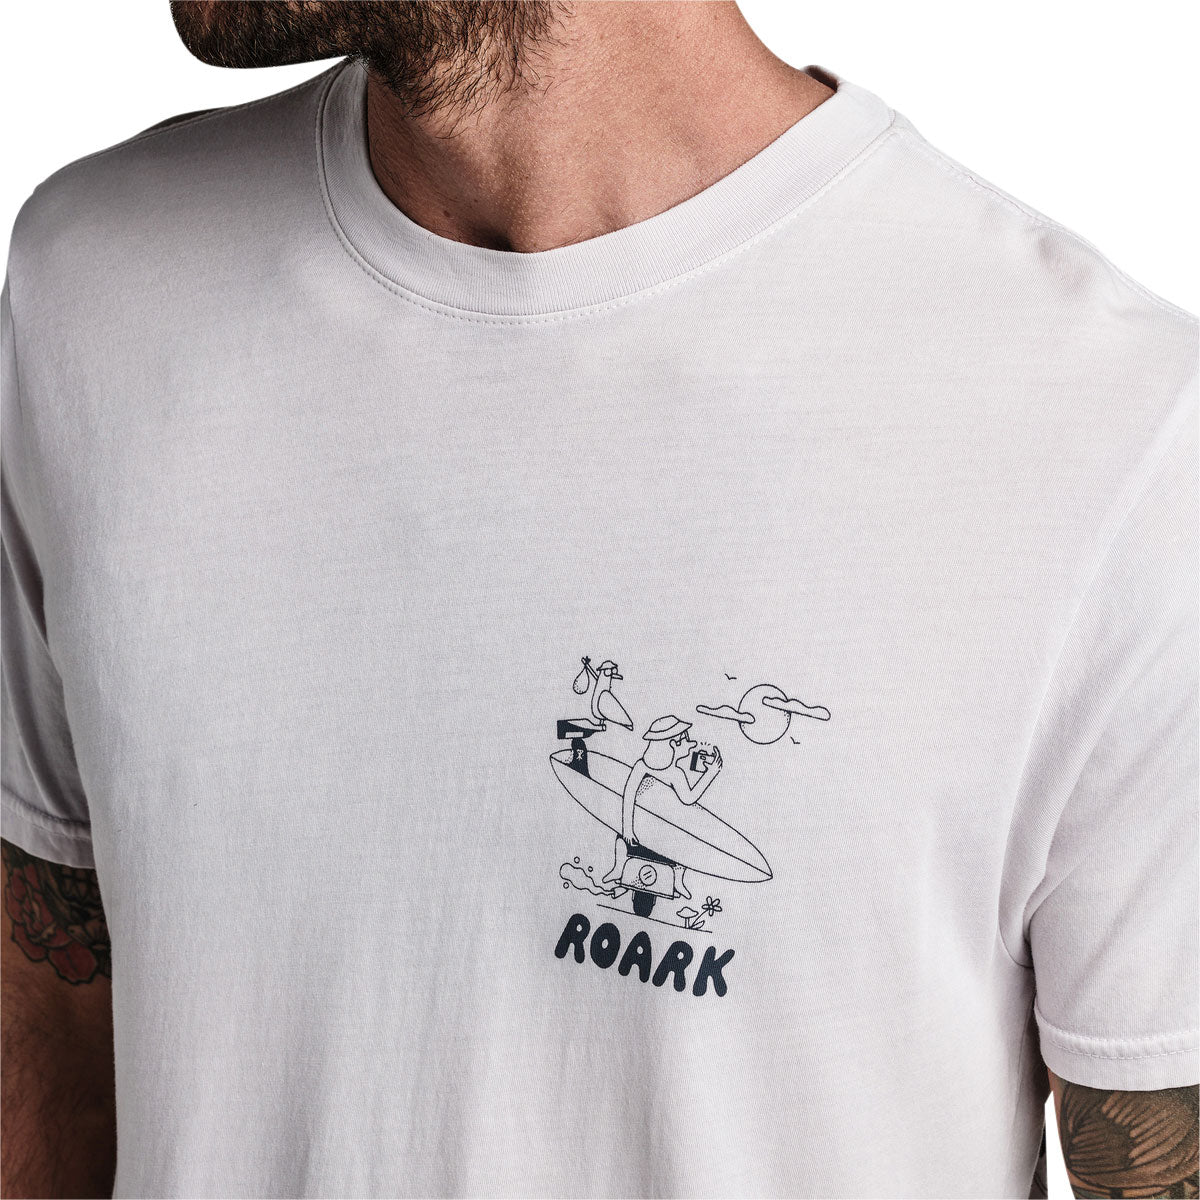 Roark Roadtrip Club T-Shirt - Dusty Lilac image 5